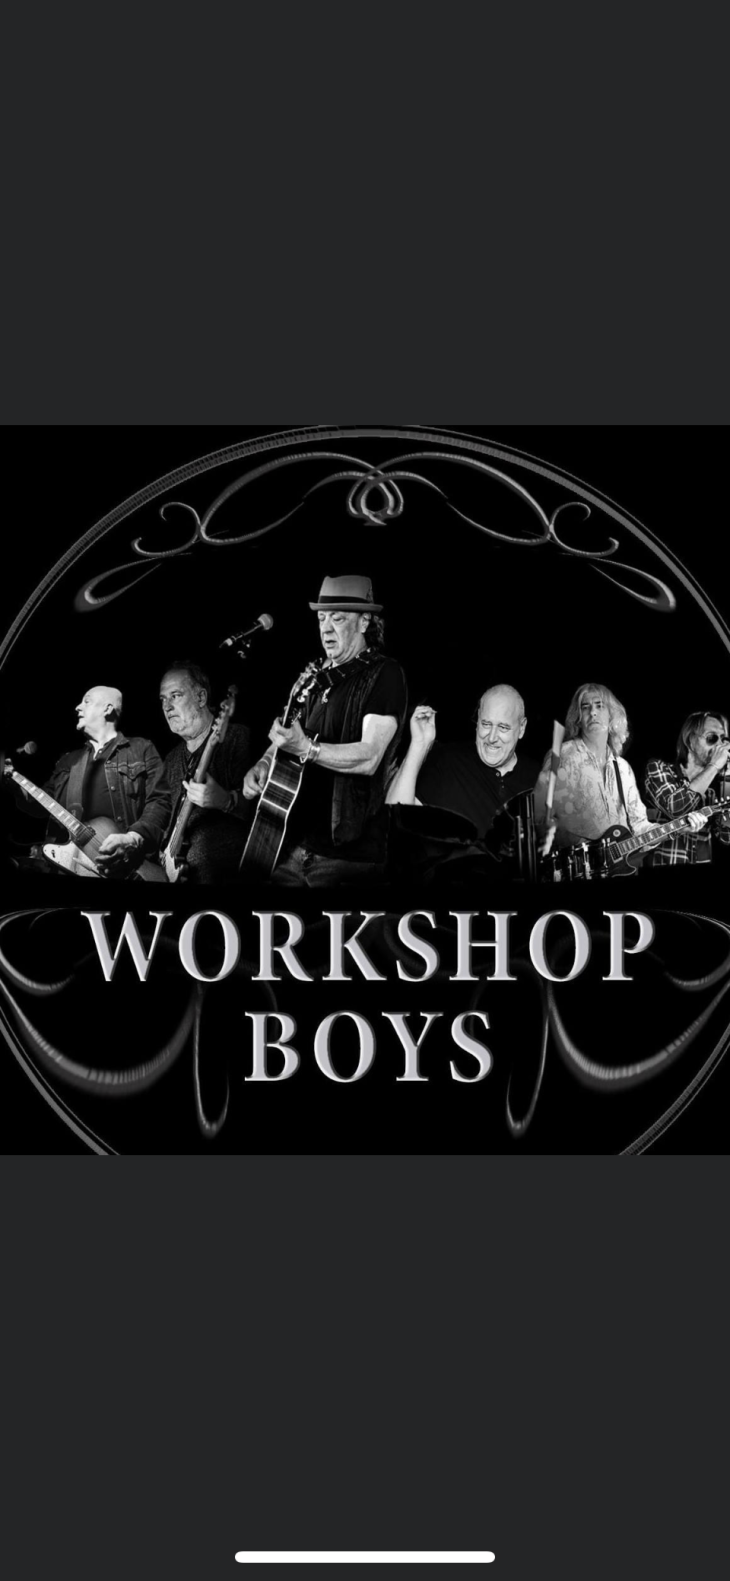 The Workshop Boys